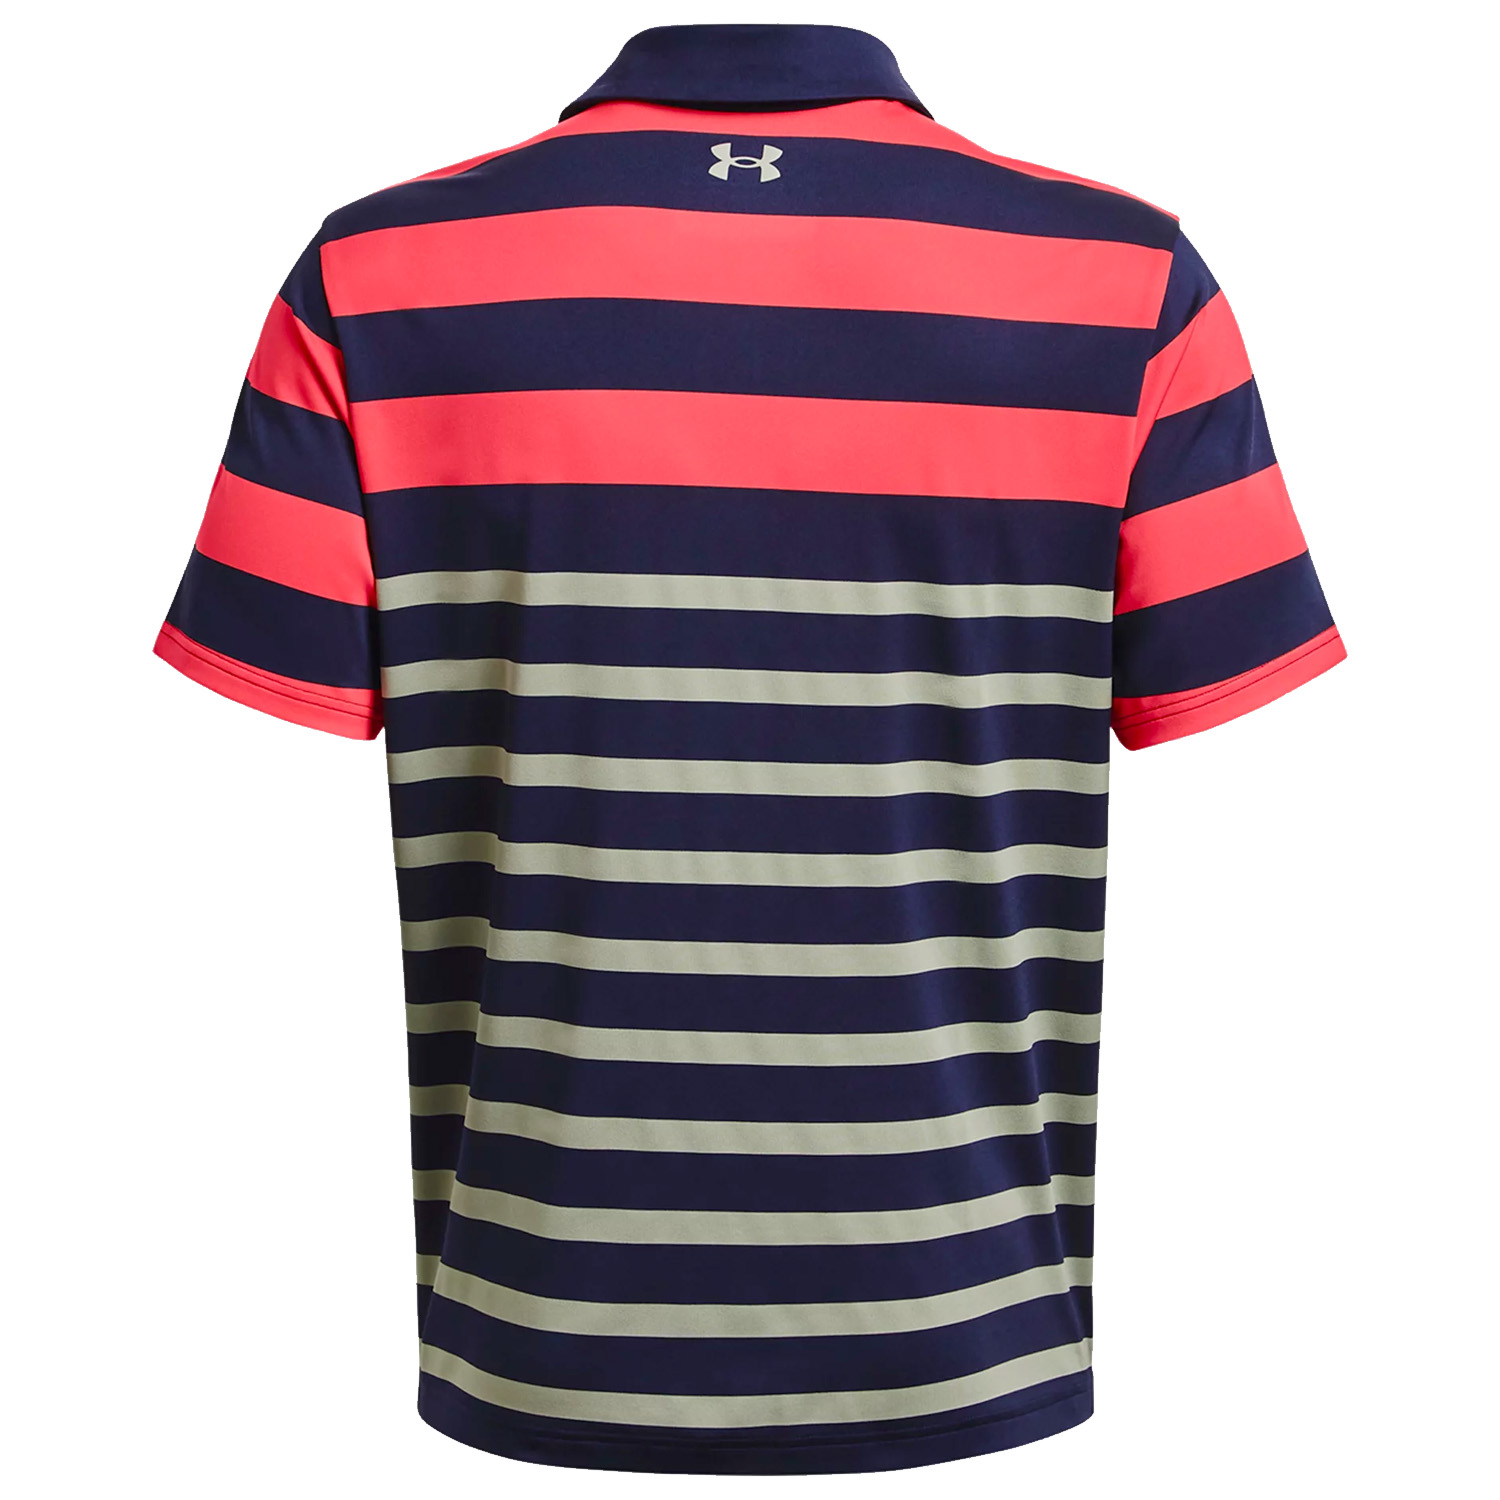 Under Armour Golf Playoff 3.0 Stripe Polo Shirt  - Midnight Navy/Red